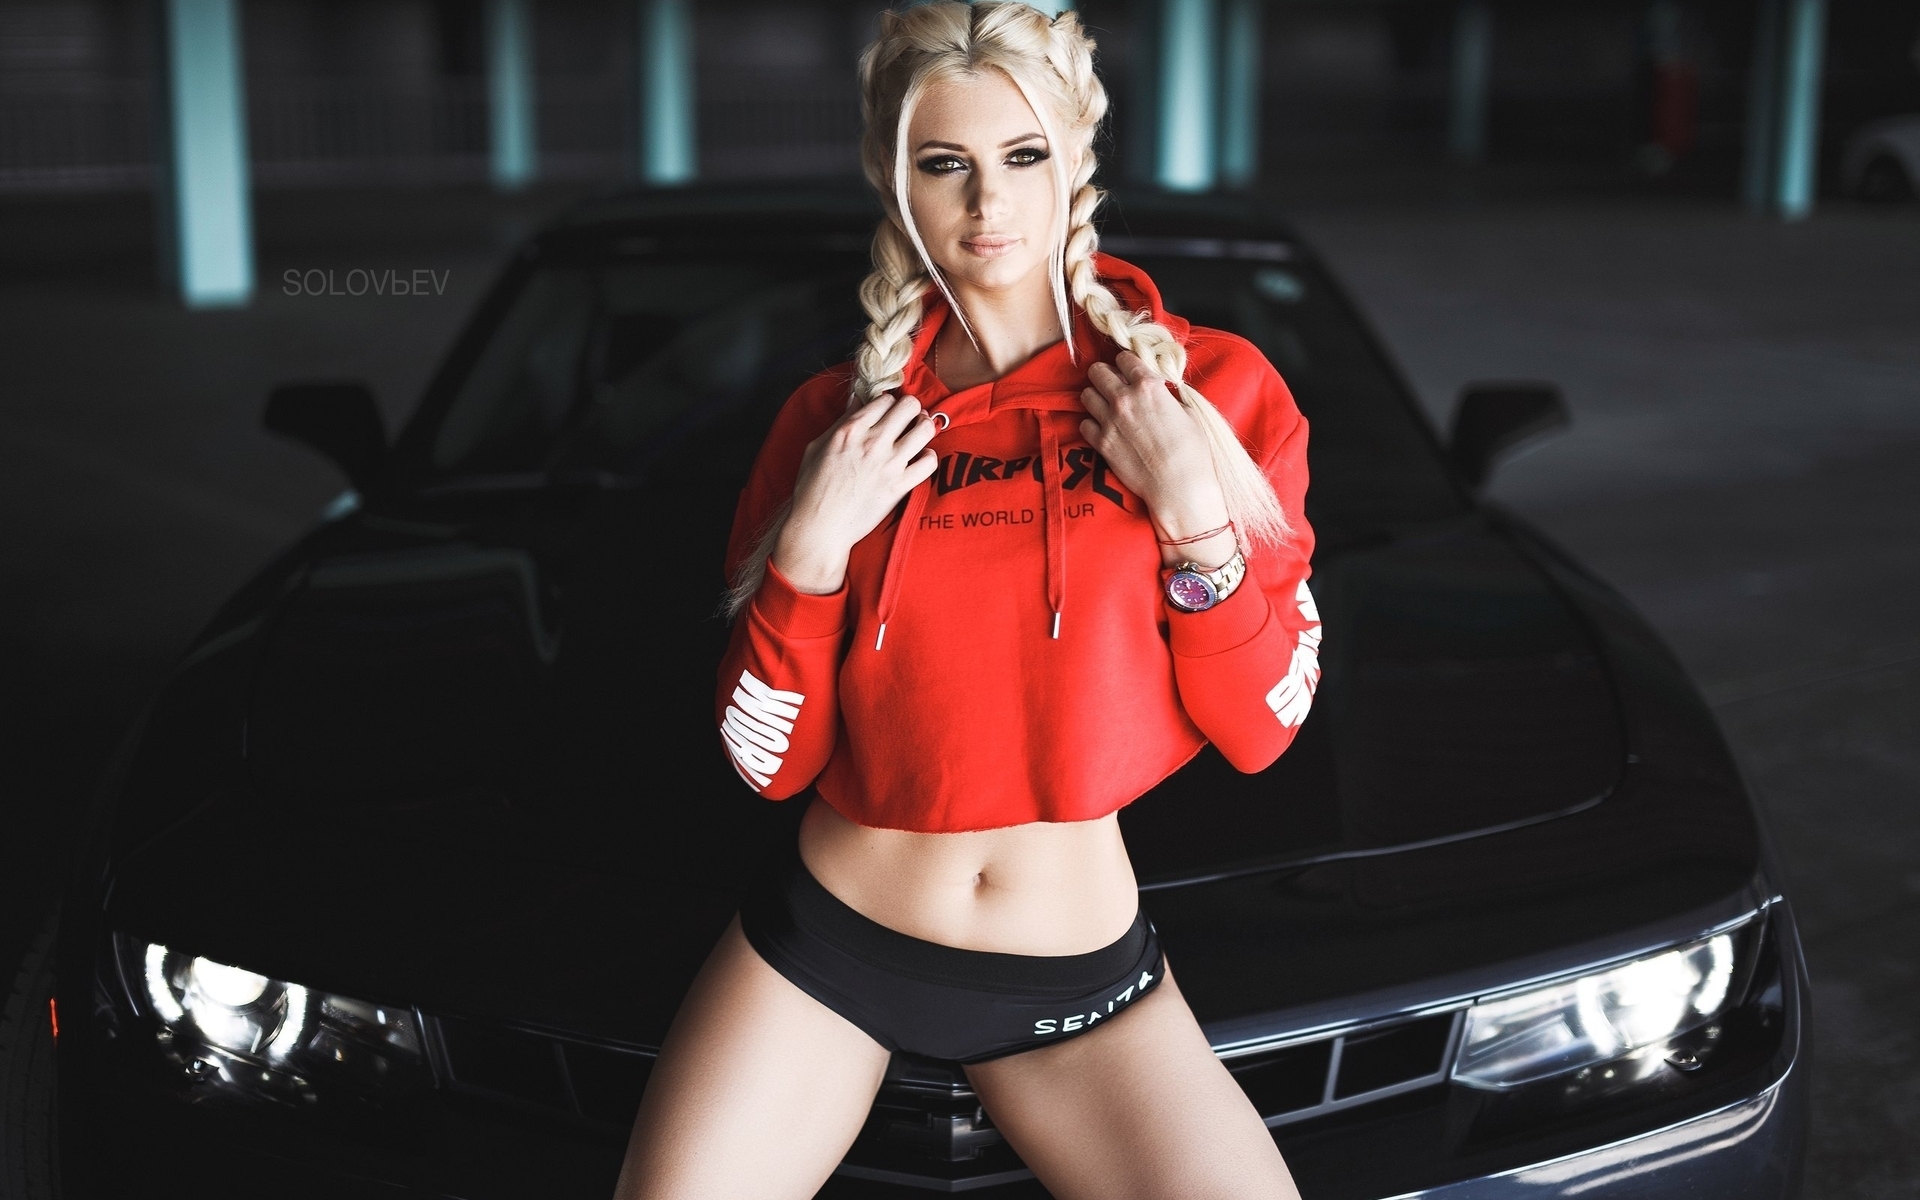 Image: Girl, blonde, person, pigtails, Solovьev, photographer, model, auto, black, Chevrolet, Camaro